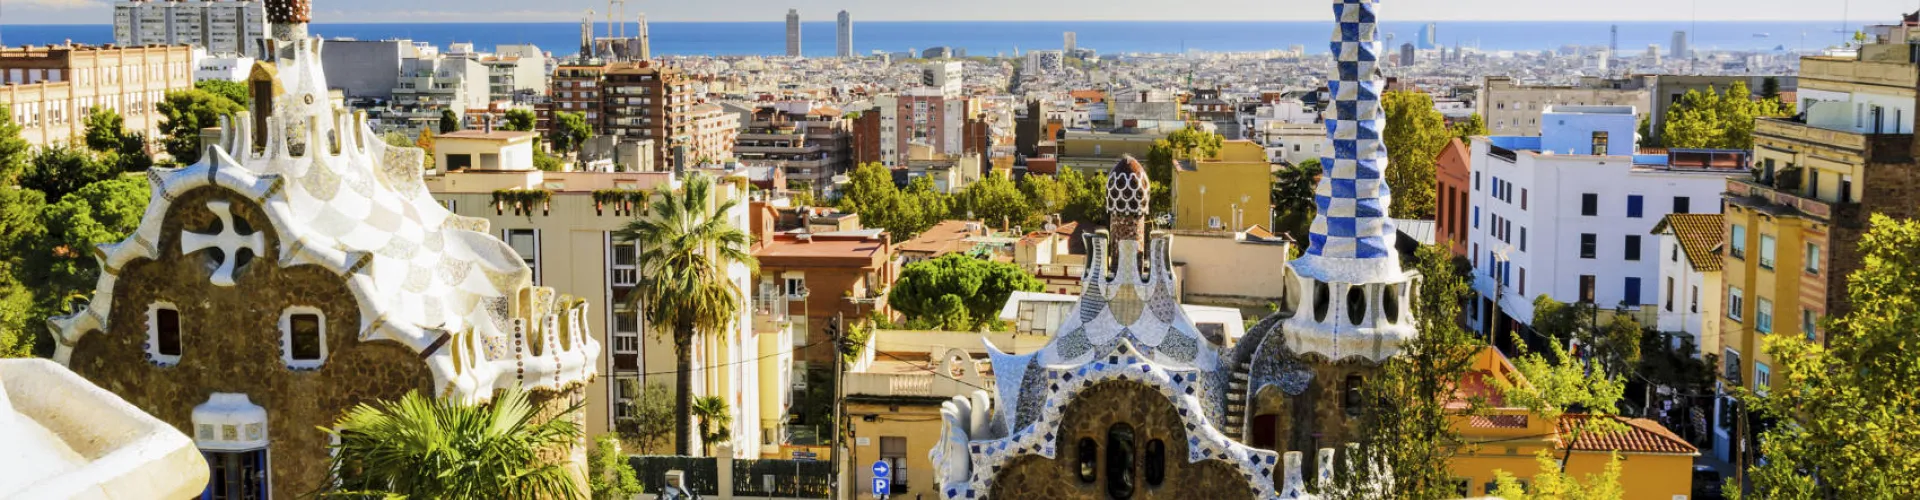 Barcelona Gaudí Tours